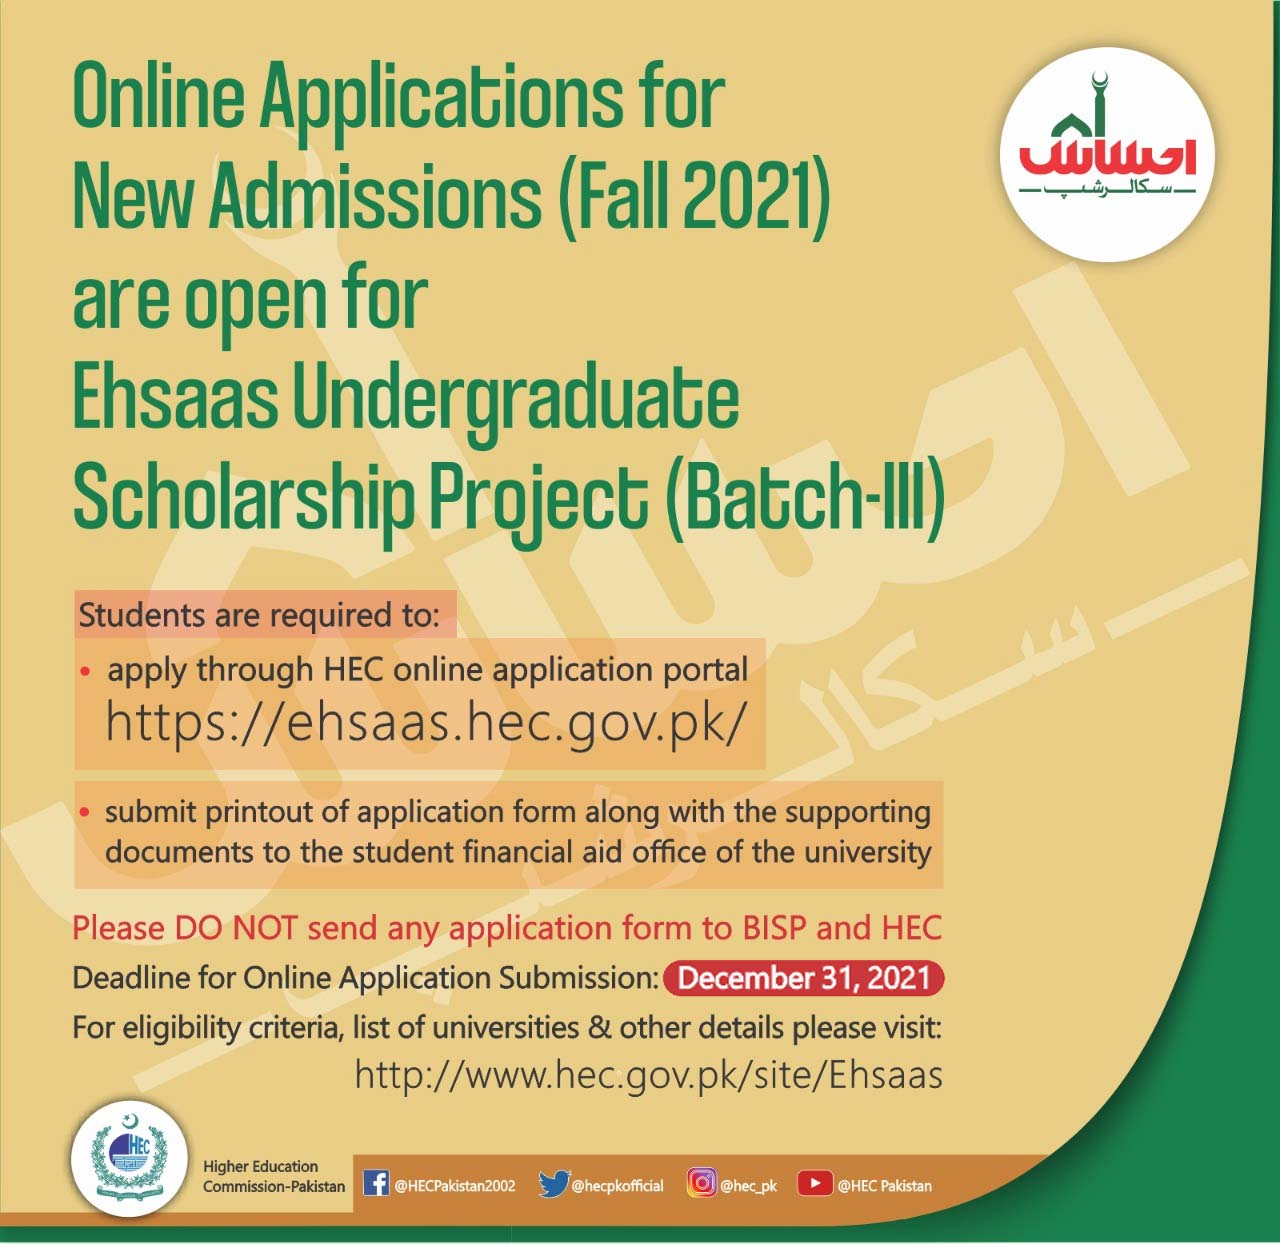 Ehsaas Undergraduate Scholarship Project (Batch-III) for 2021-22 